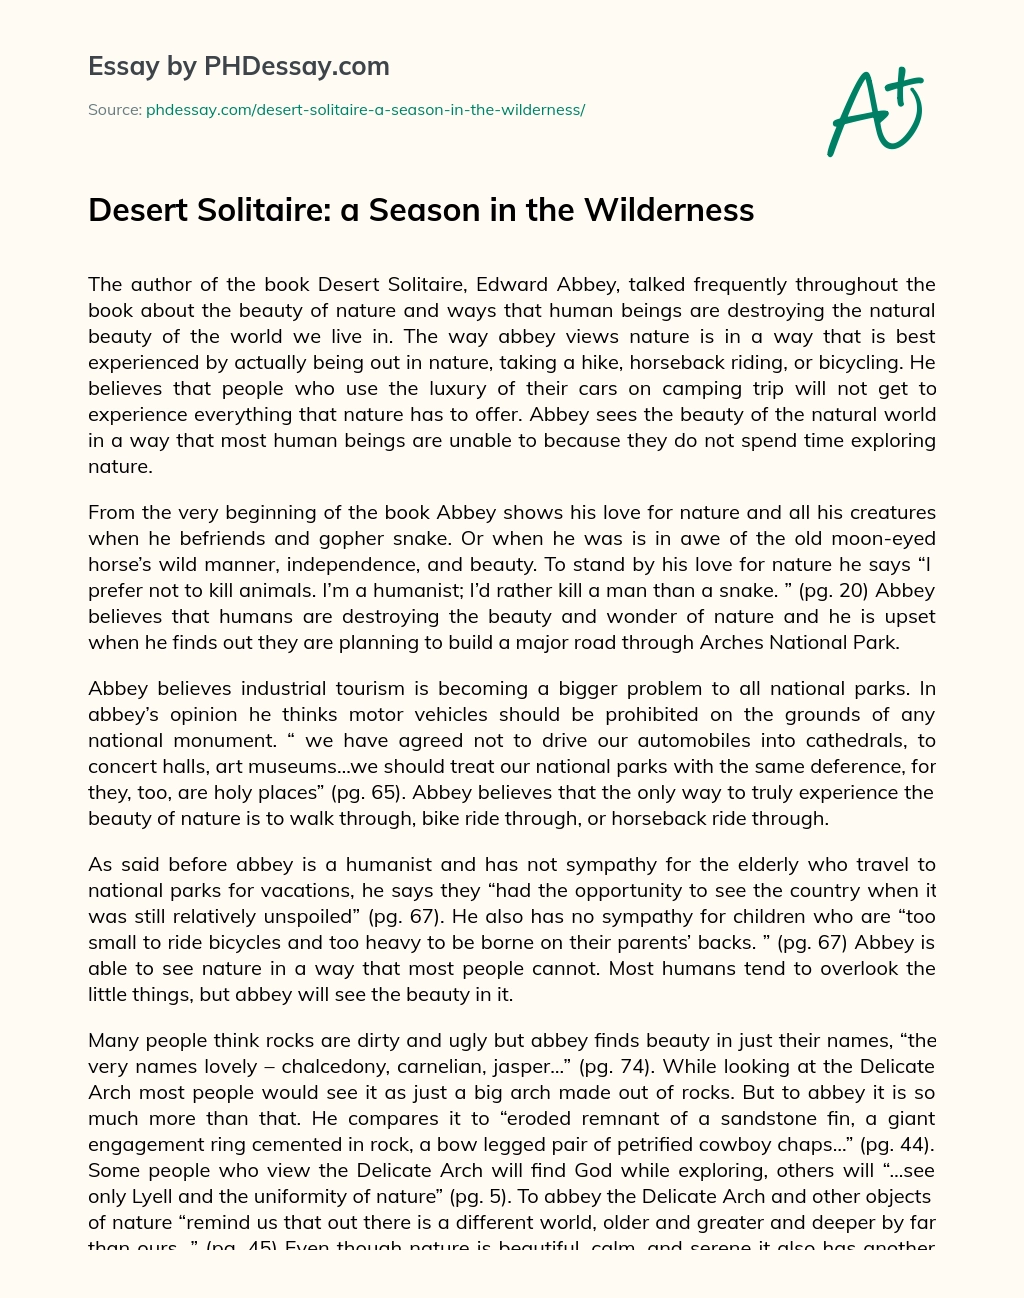 Desert Solitaire: a Season in the Wilderness essay